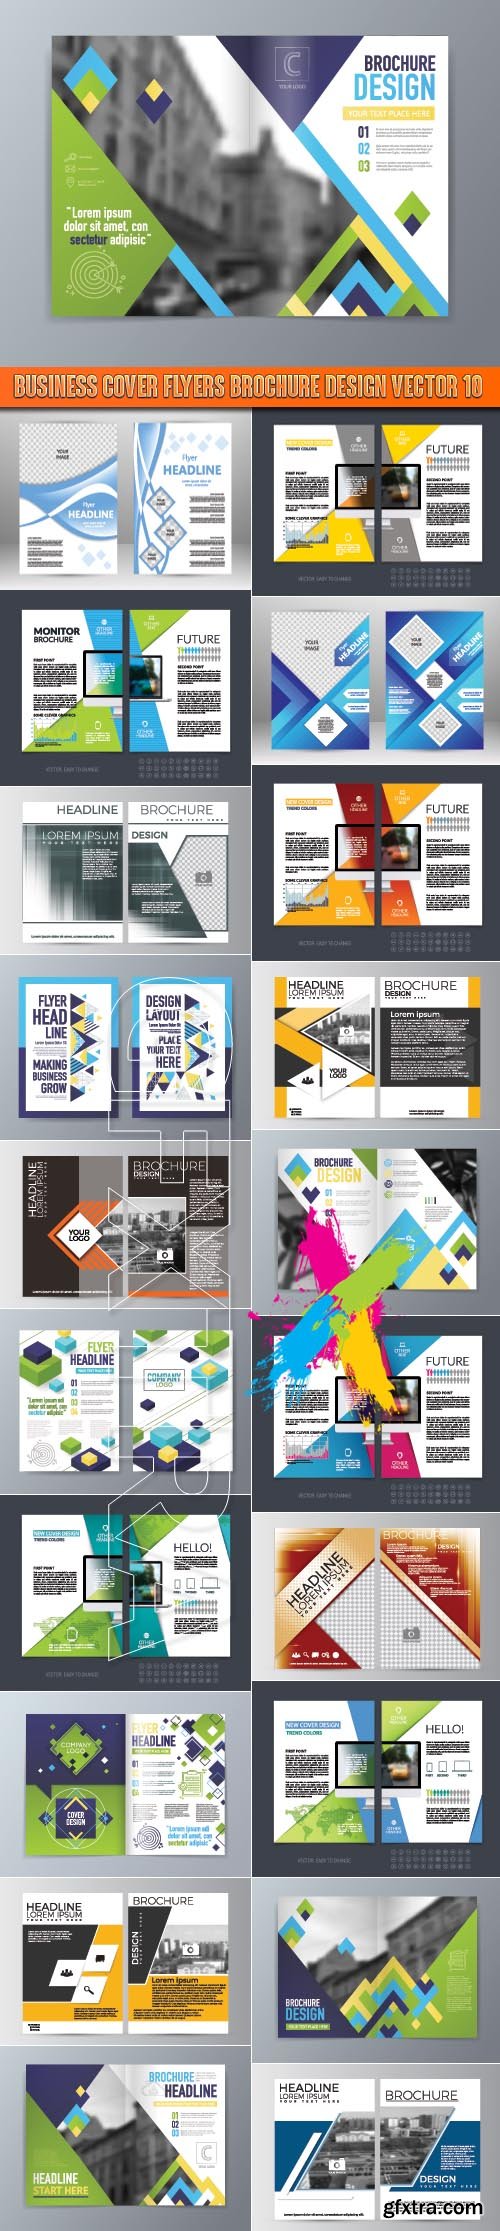 Business cover flyers brochure design vector 10